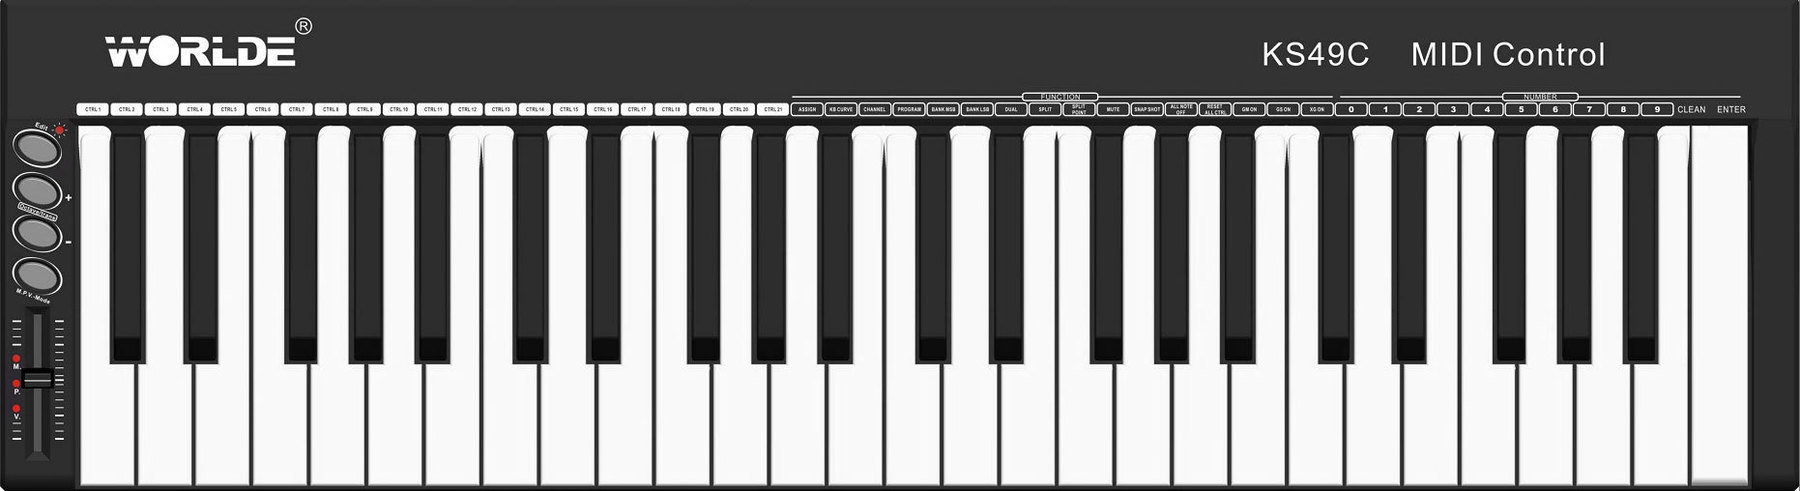 Clavier MIDI Worlde KS49C